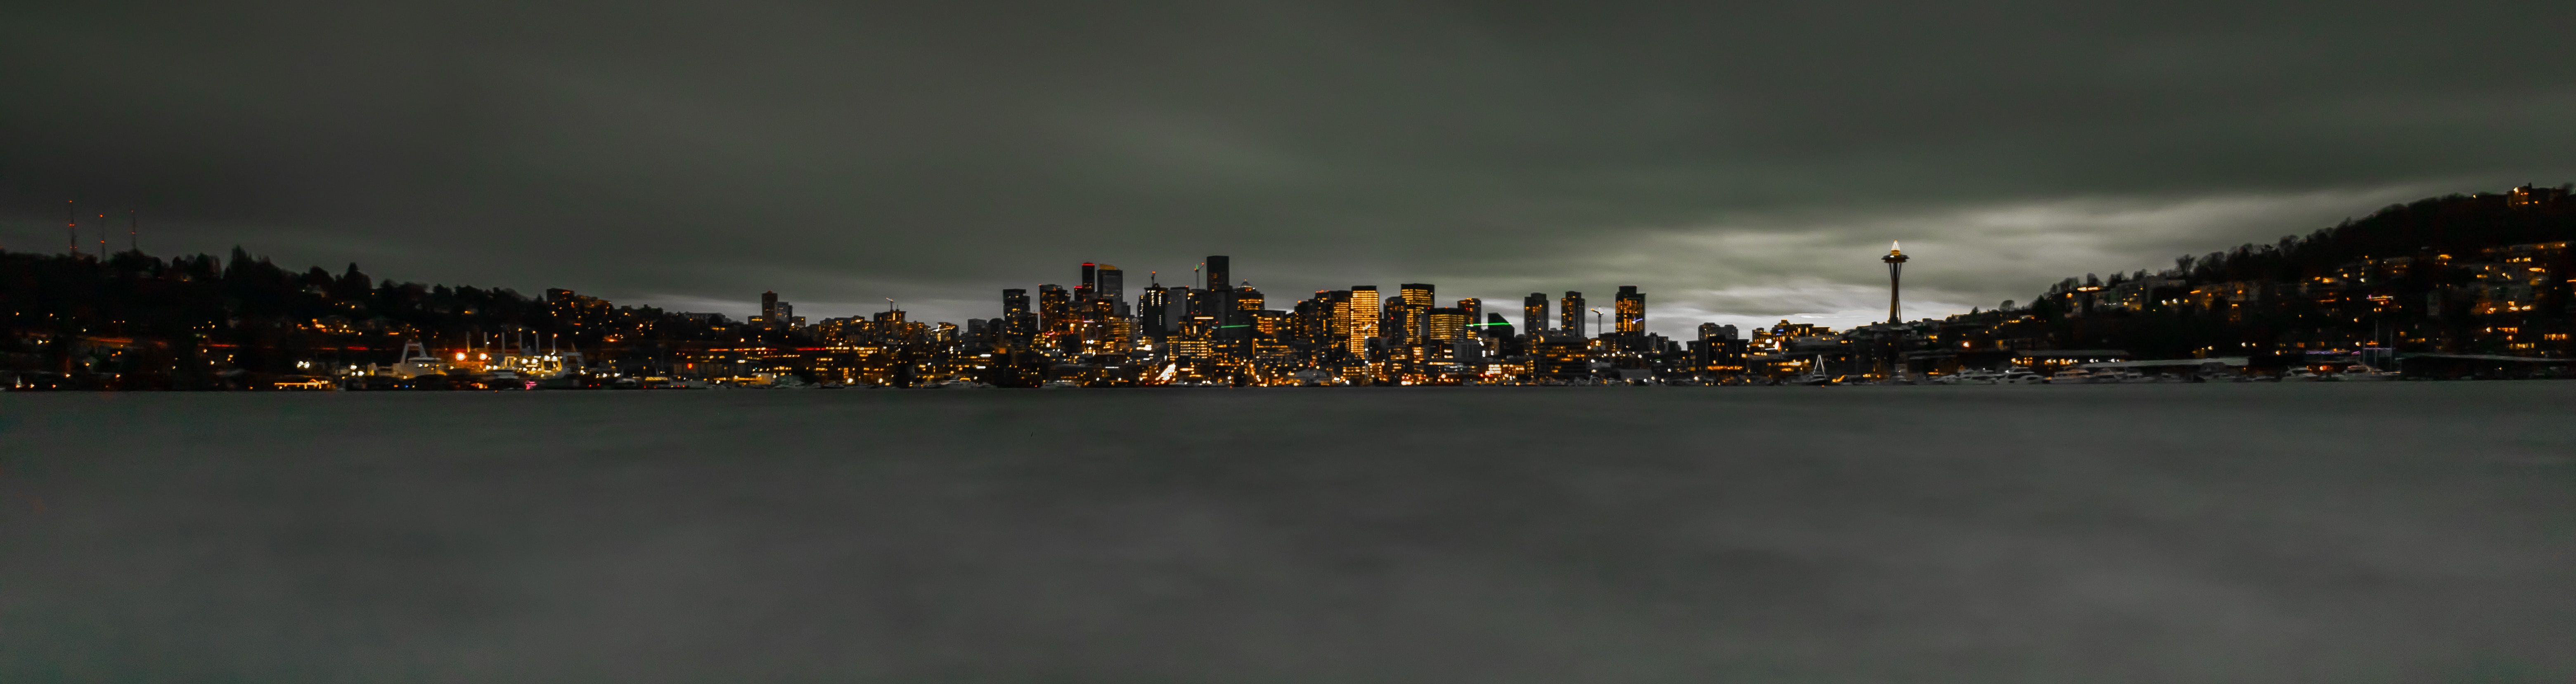 Panorama of Seattle